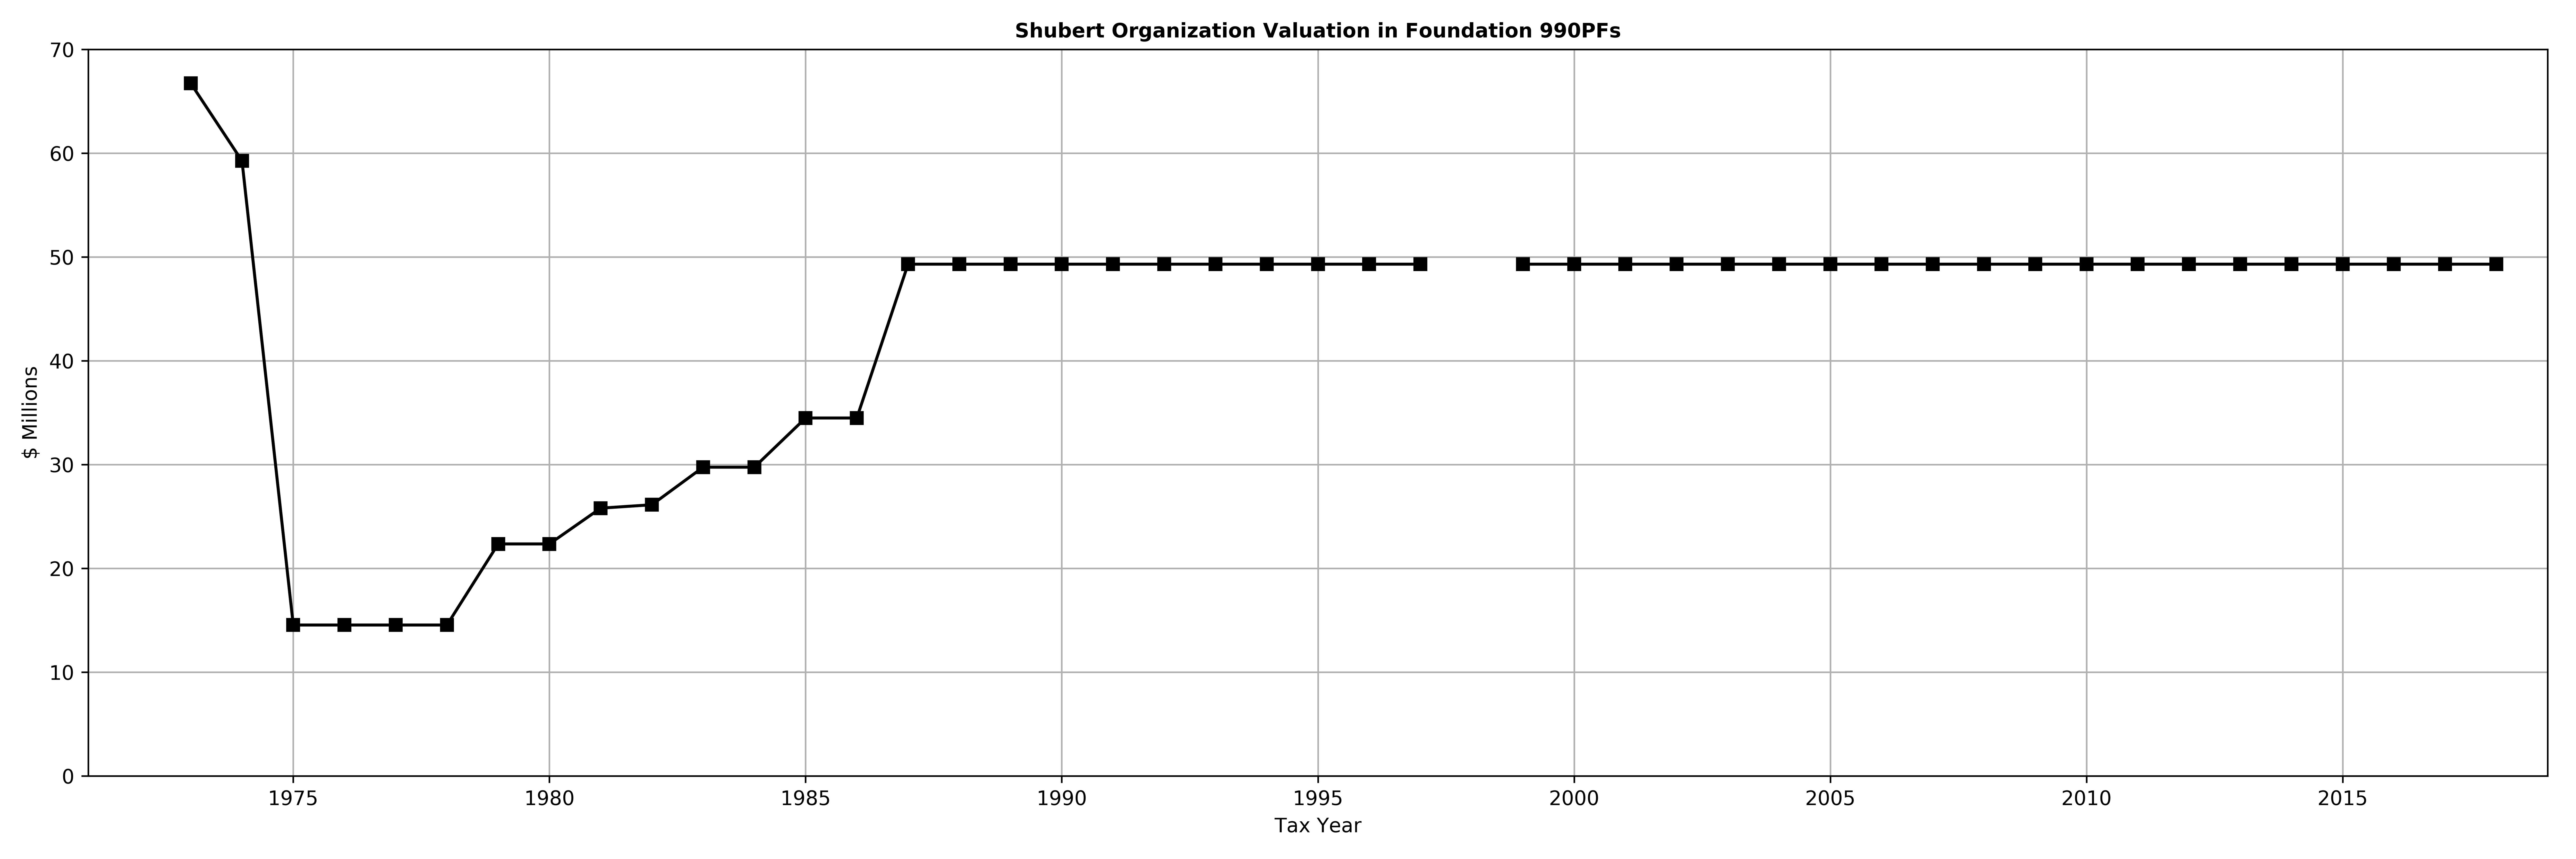 Organization Valuation